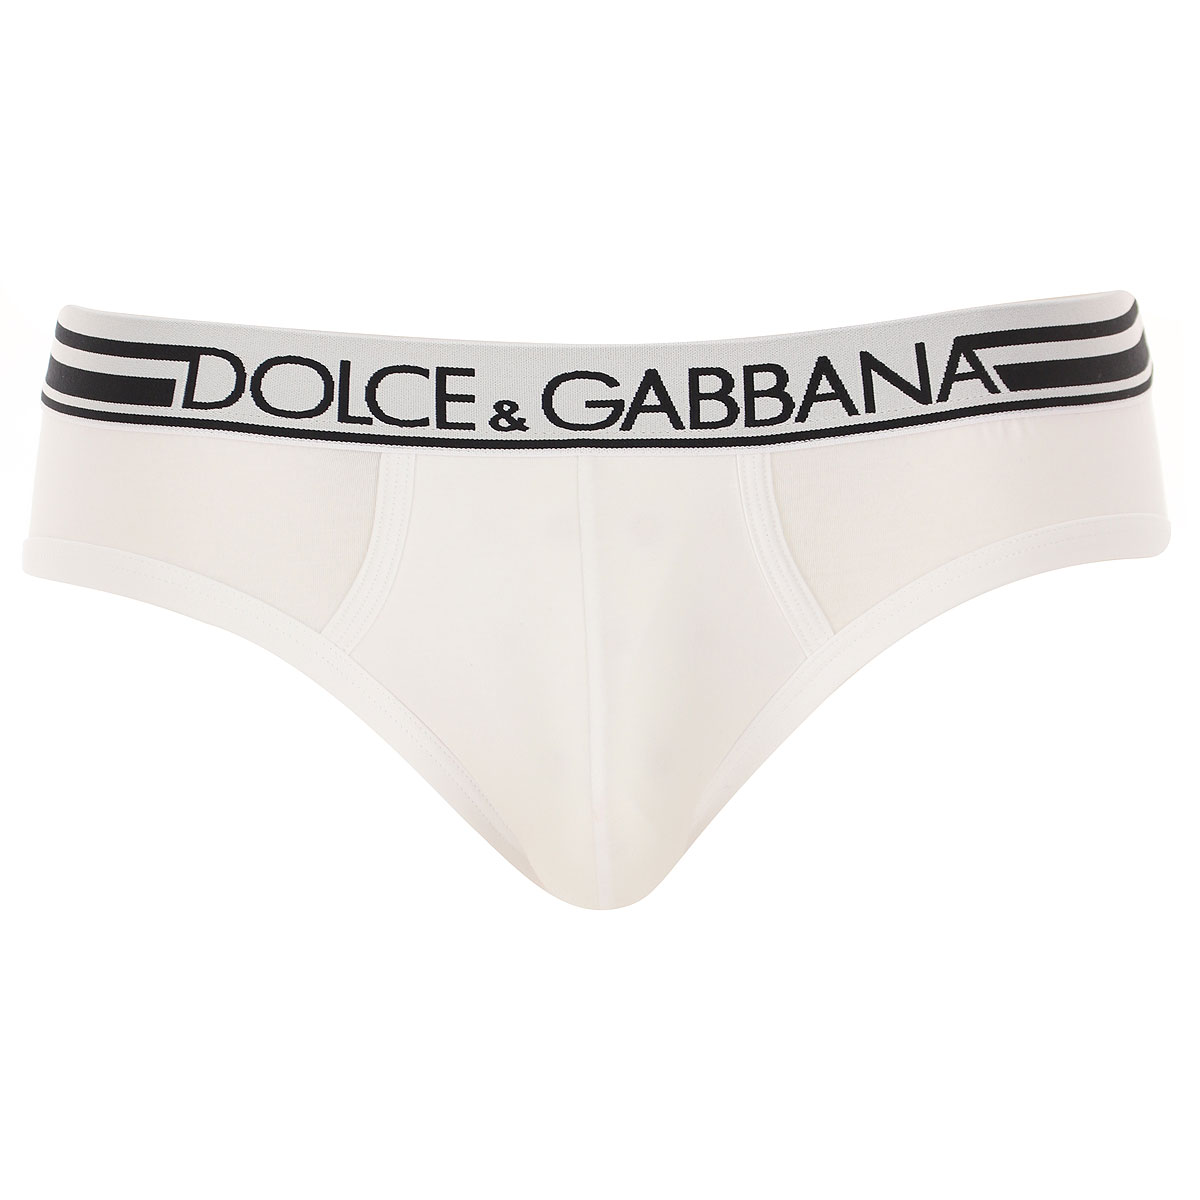 Mens Underwear Dolce & Gabbana, Style code: m3b24j-fuech-w0800